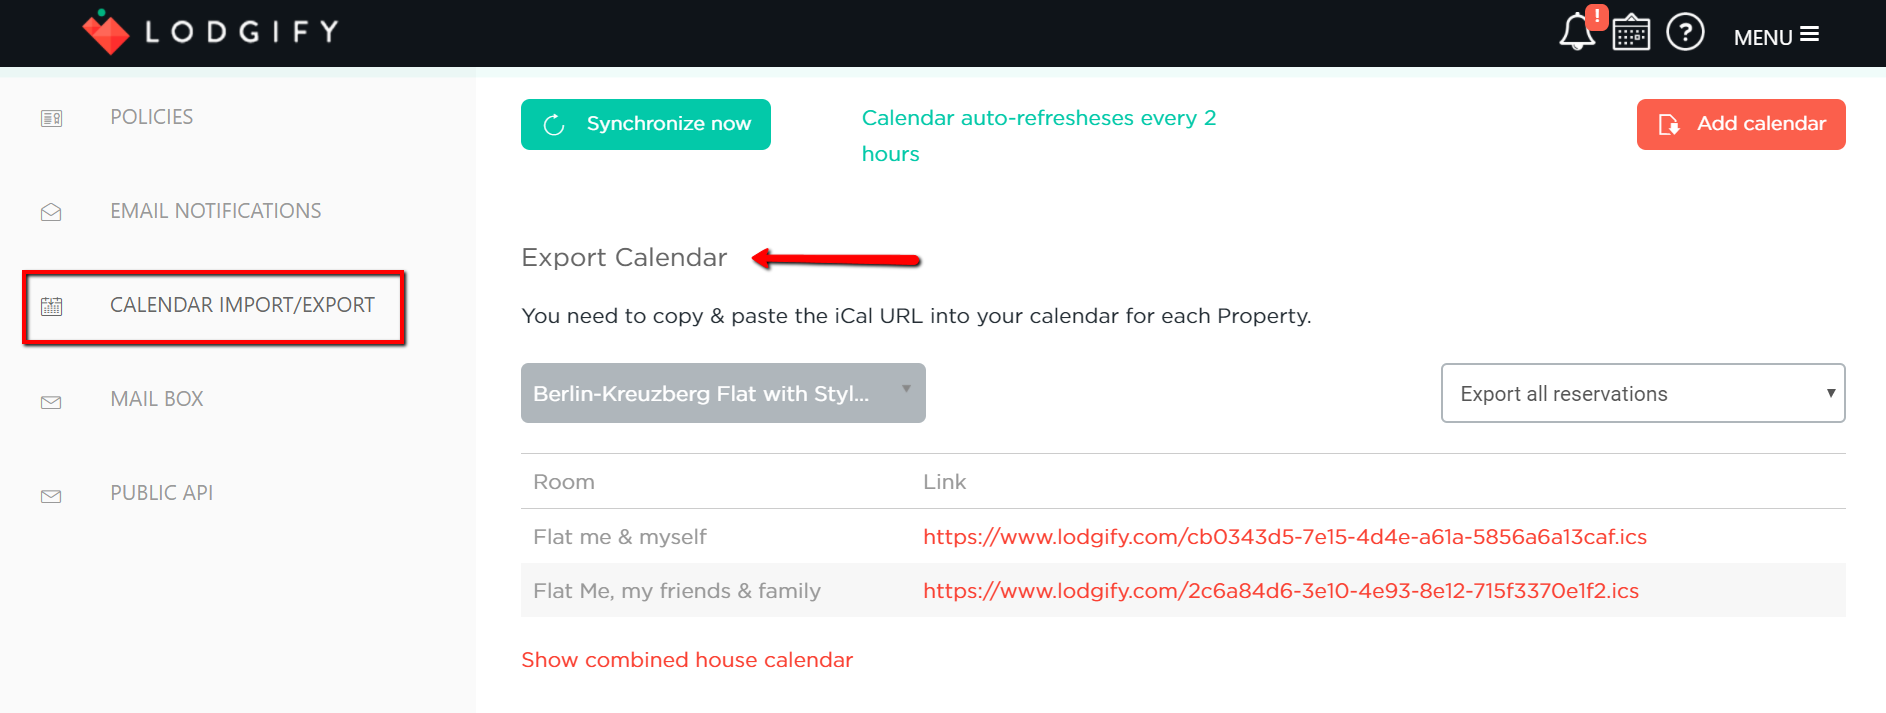 export just calendar and tasks